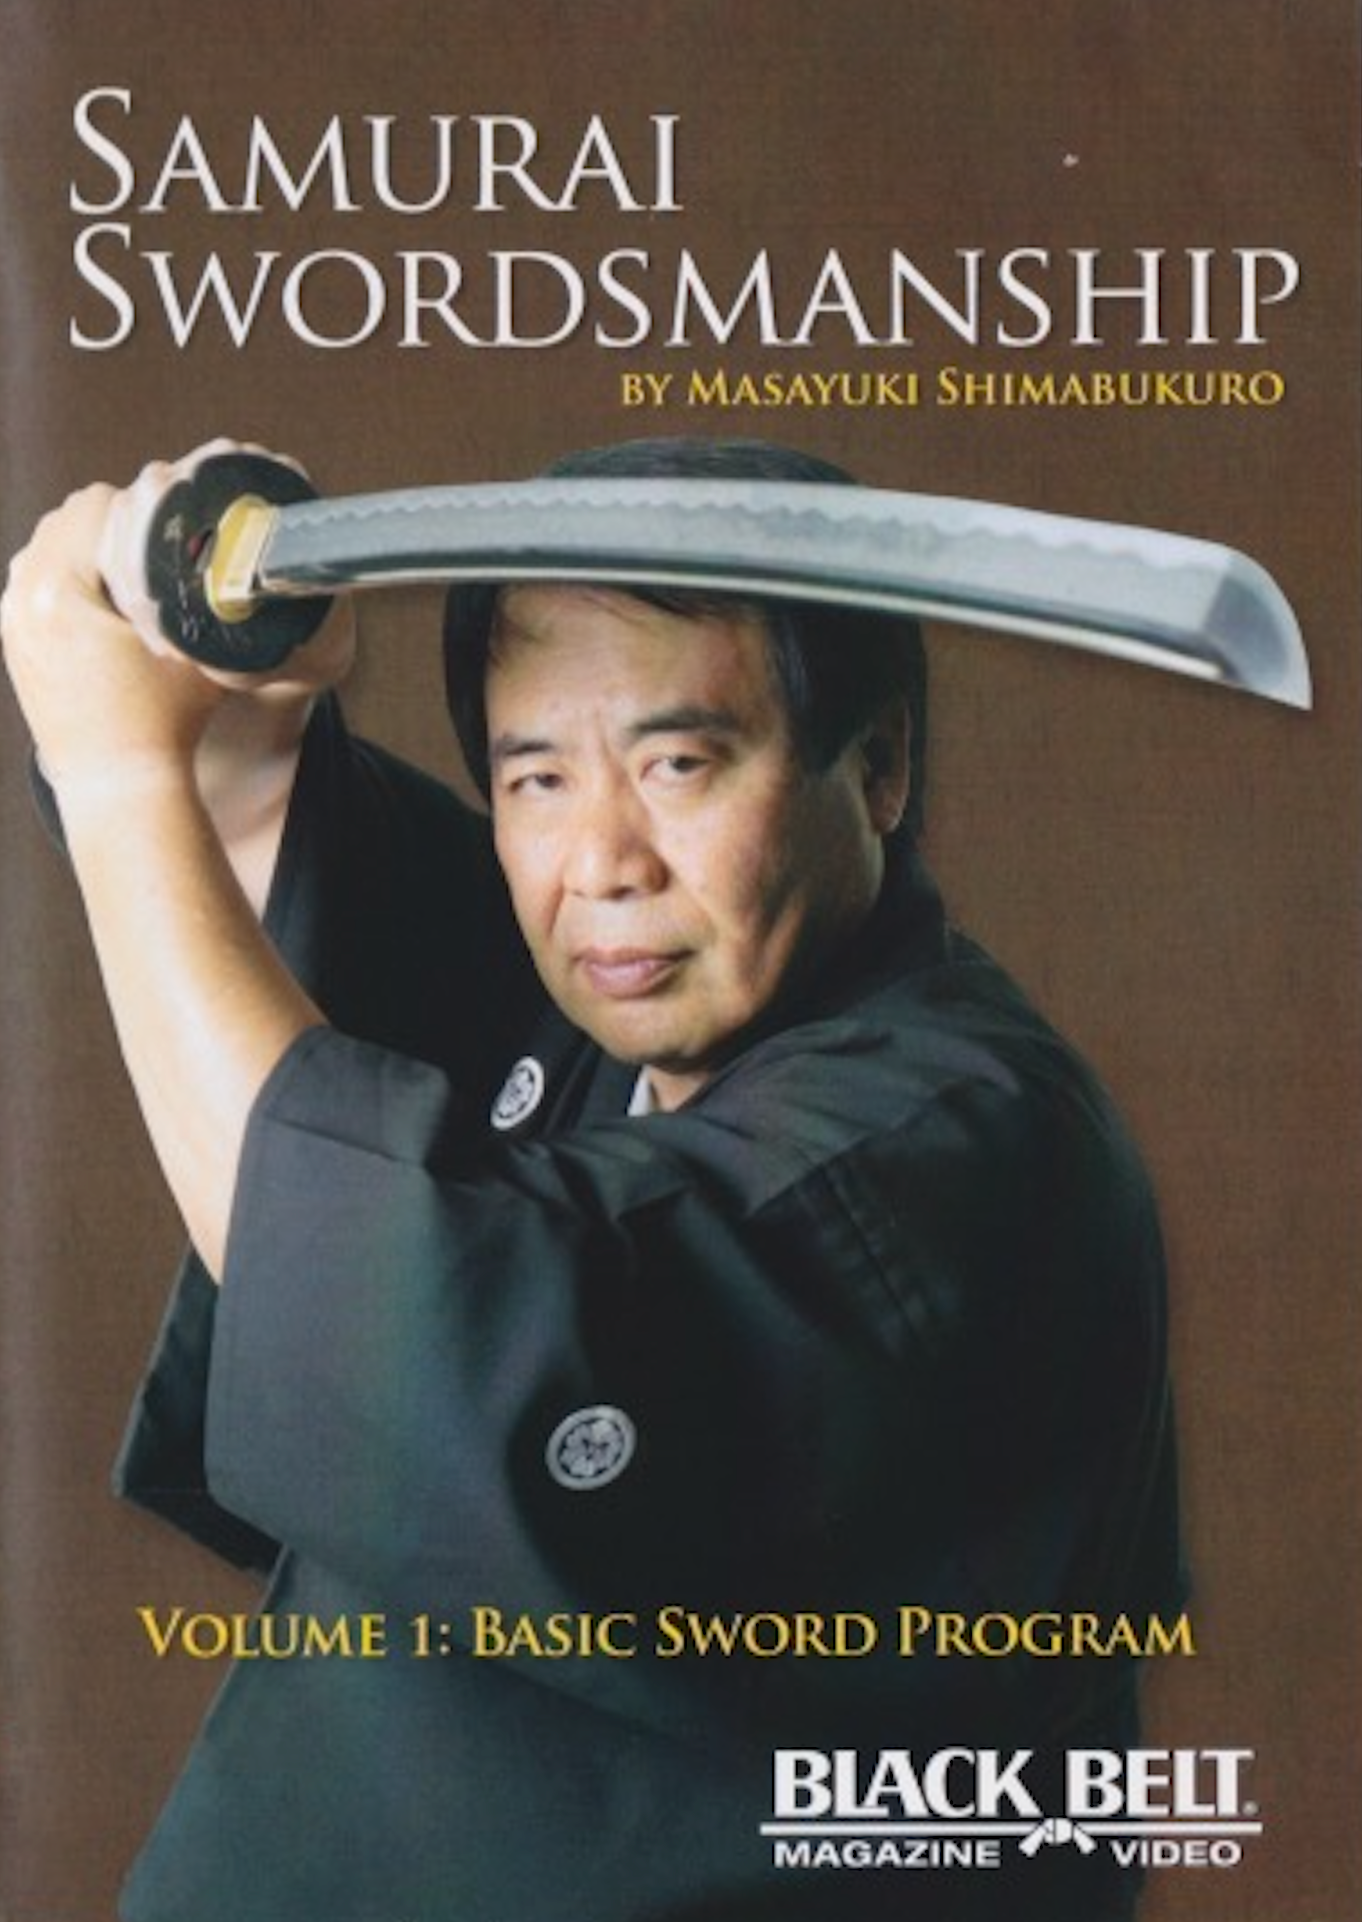 Samurai Swordsmanship DVD 1: Basic Sword Program by Masayuki Shimabukuro (Preowned)